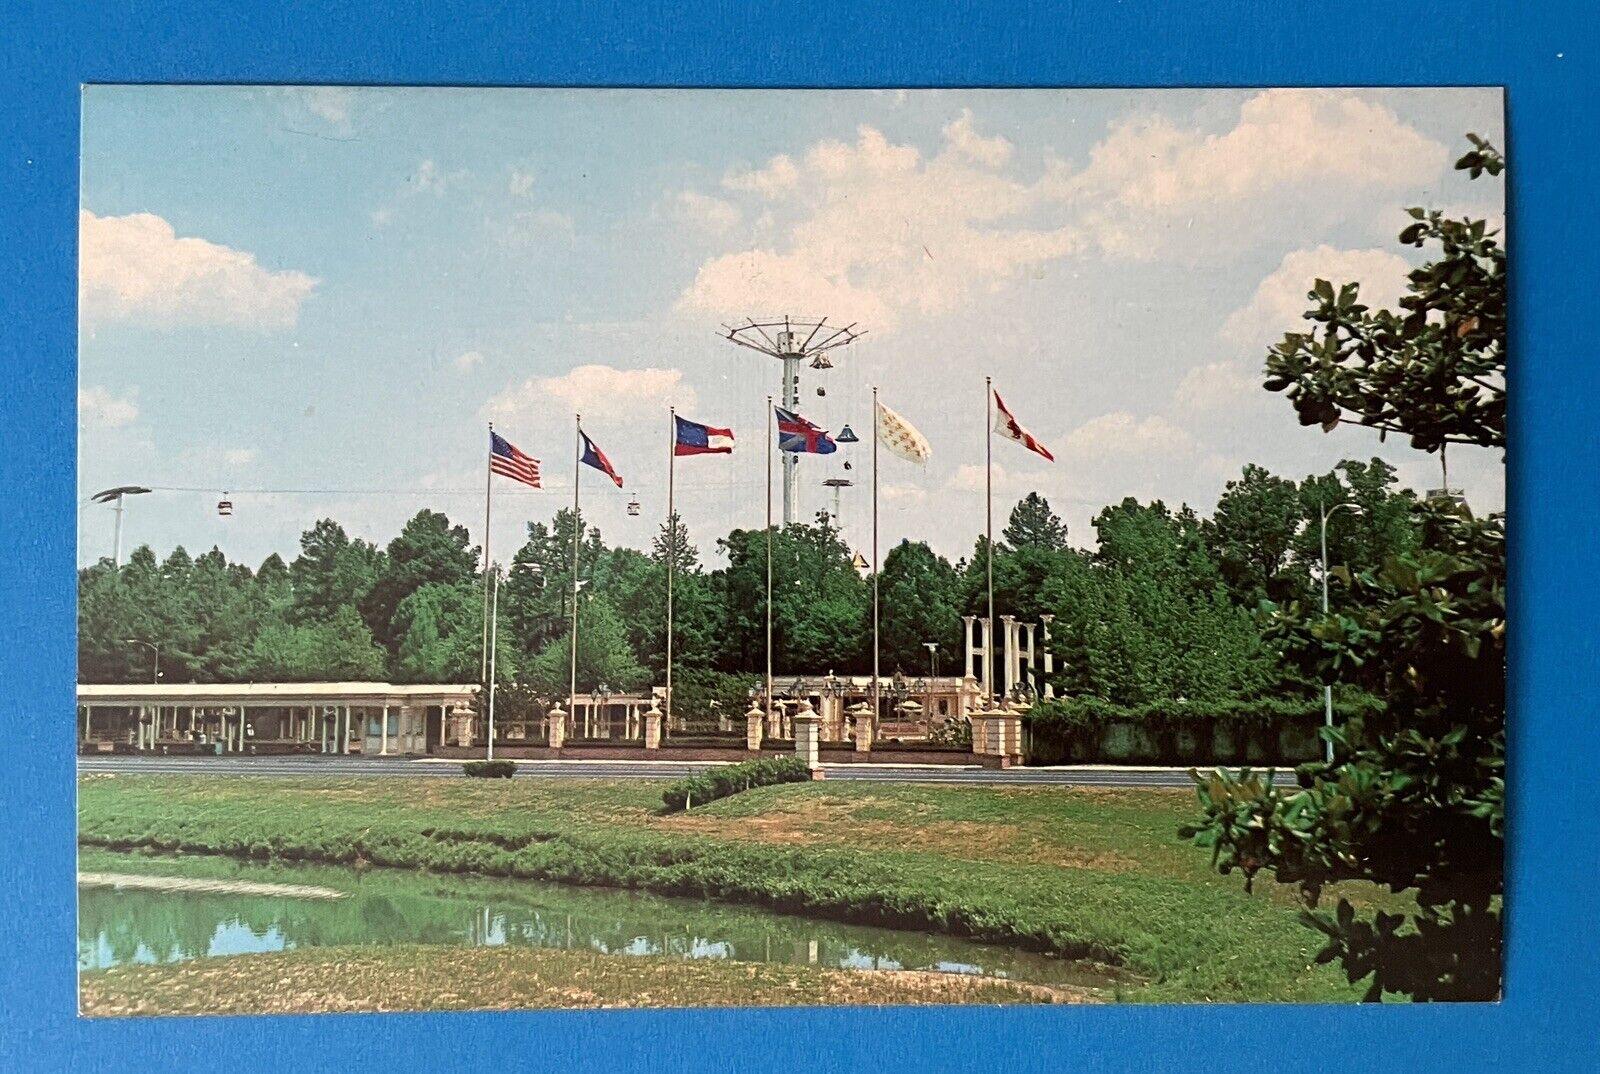 ATLANTA Georgia MAIN ENTRANCE TO SIX FLAGS AMUSEMENT PARK Vintage Postcard